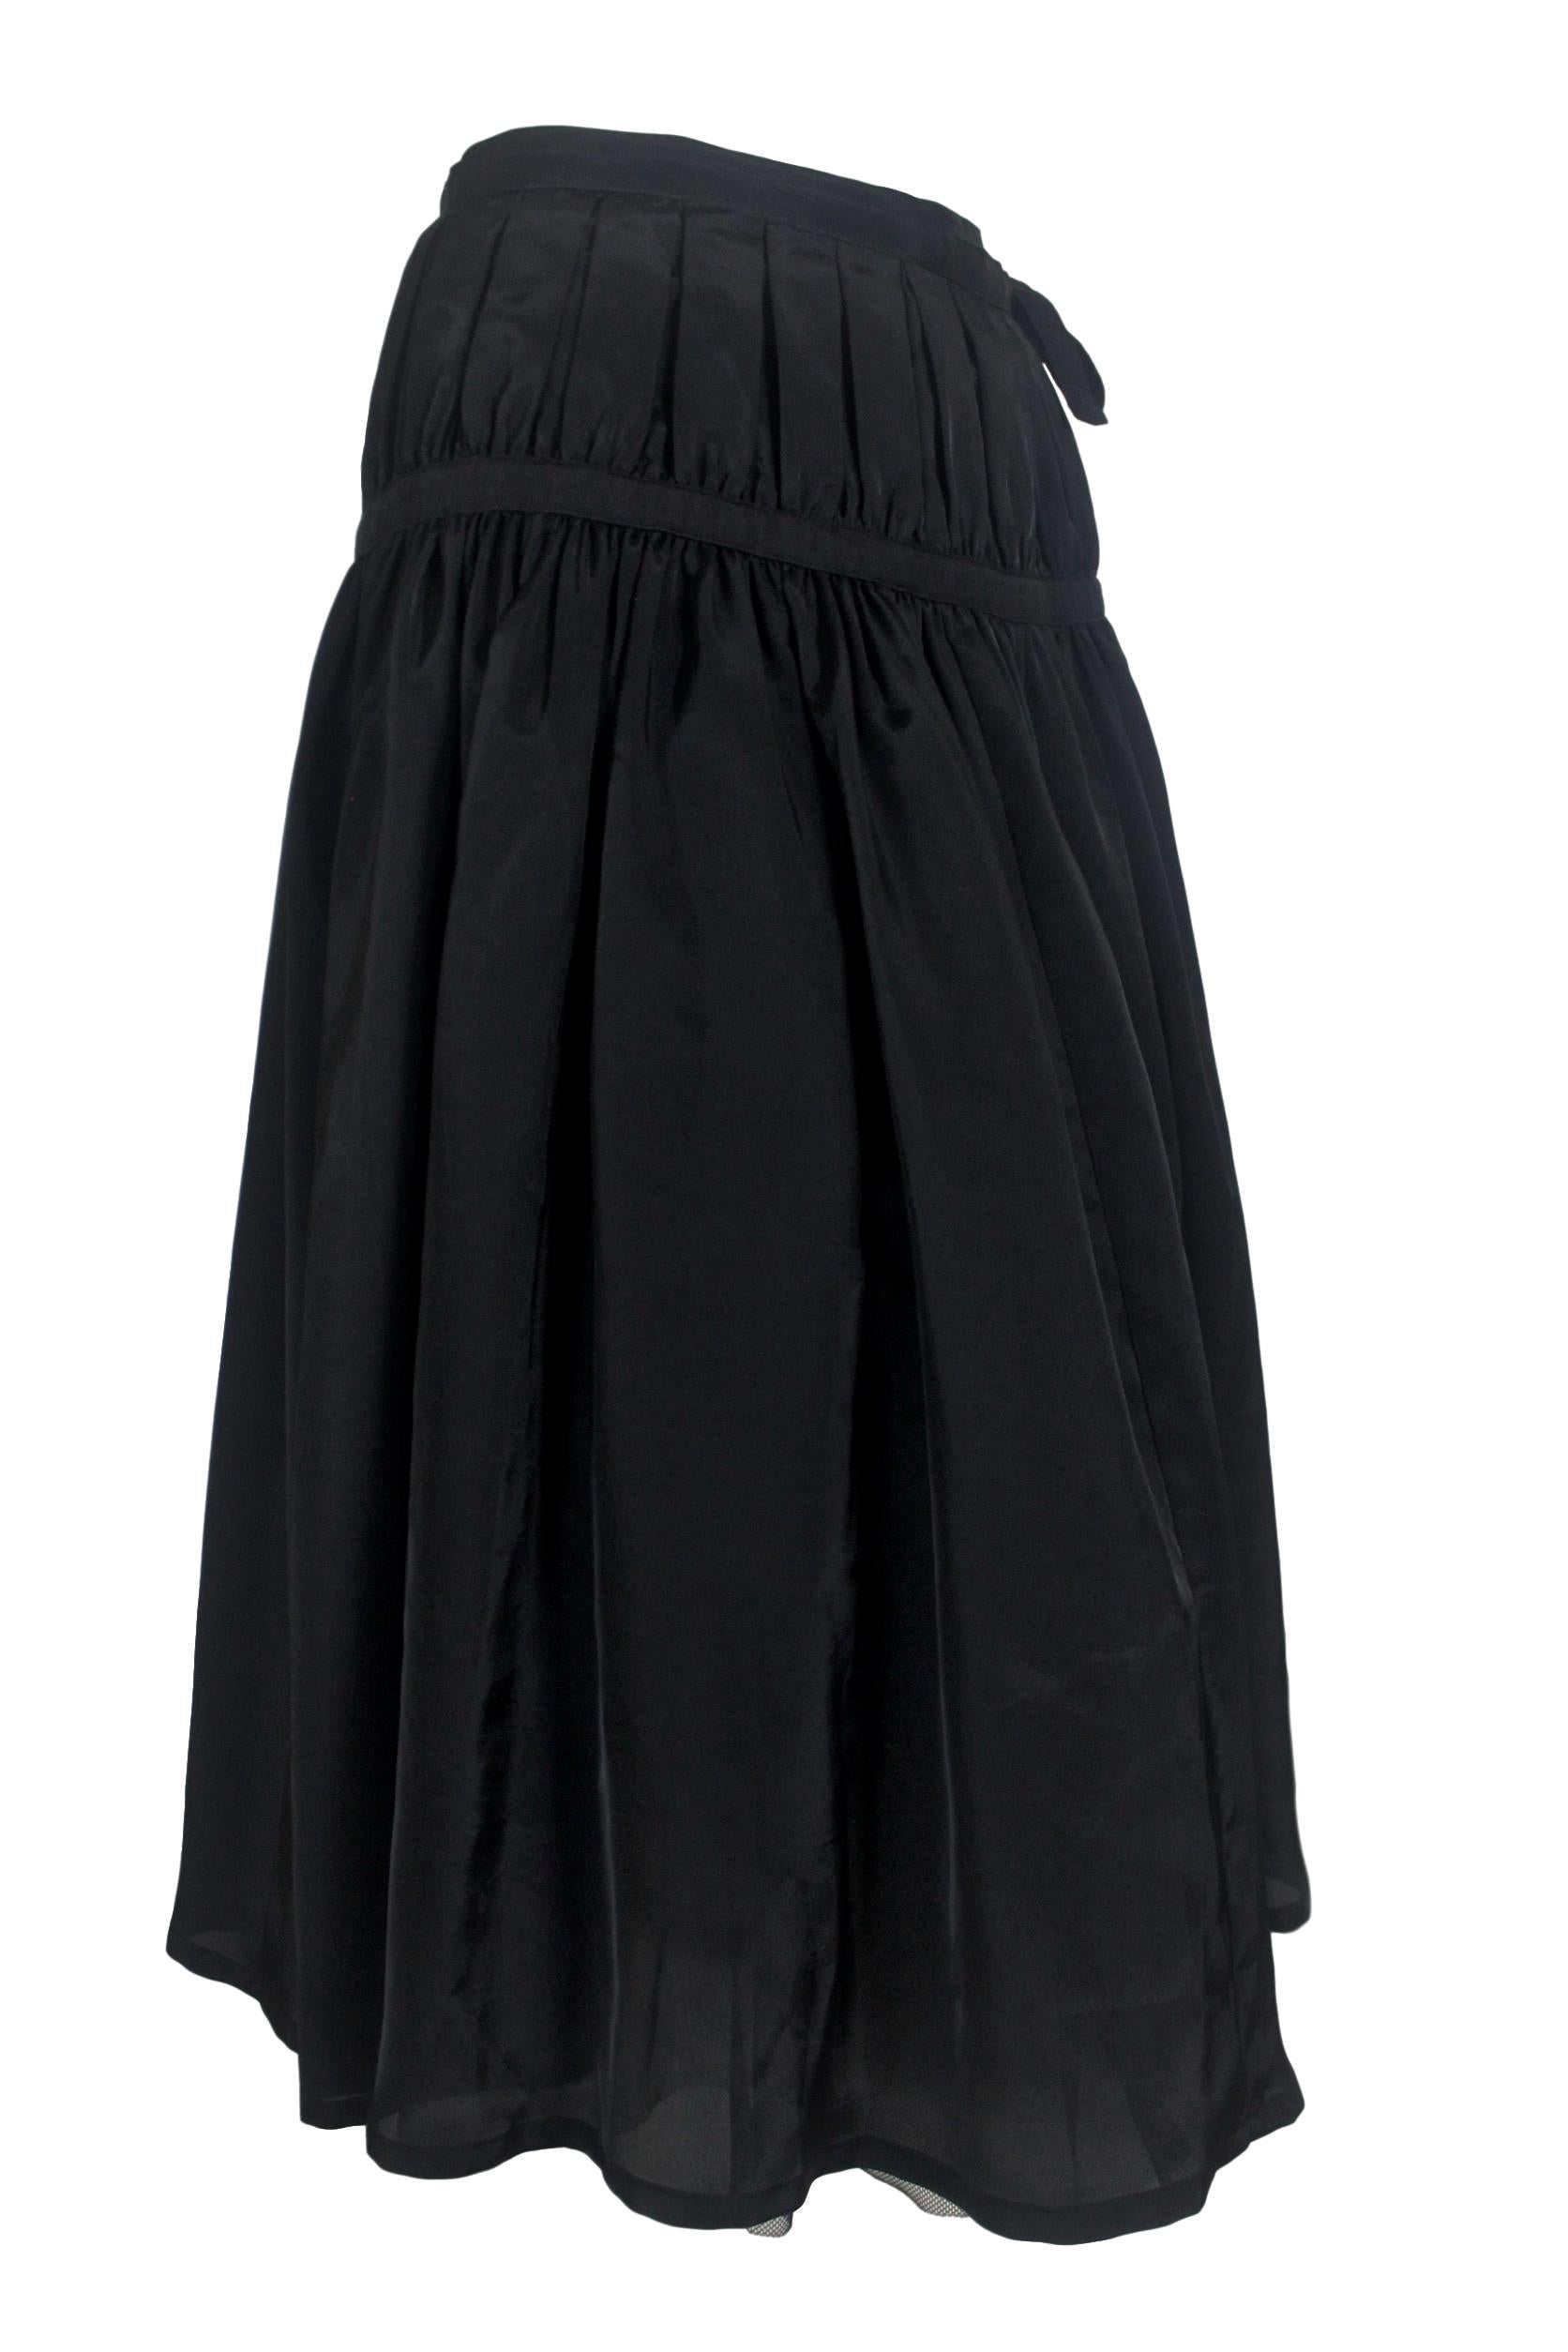 Comme des Garcons Tricot Double Layer Wrap Skirt 2007 For Sale 3